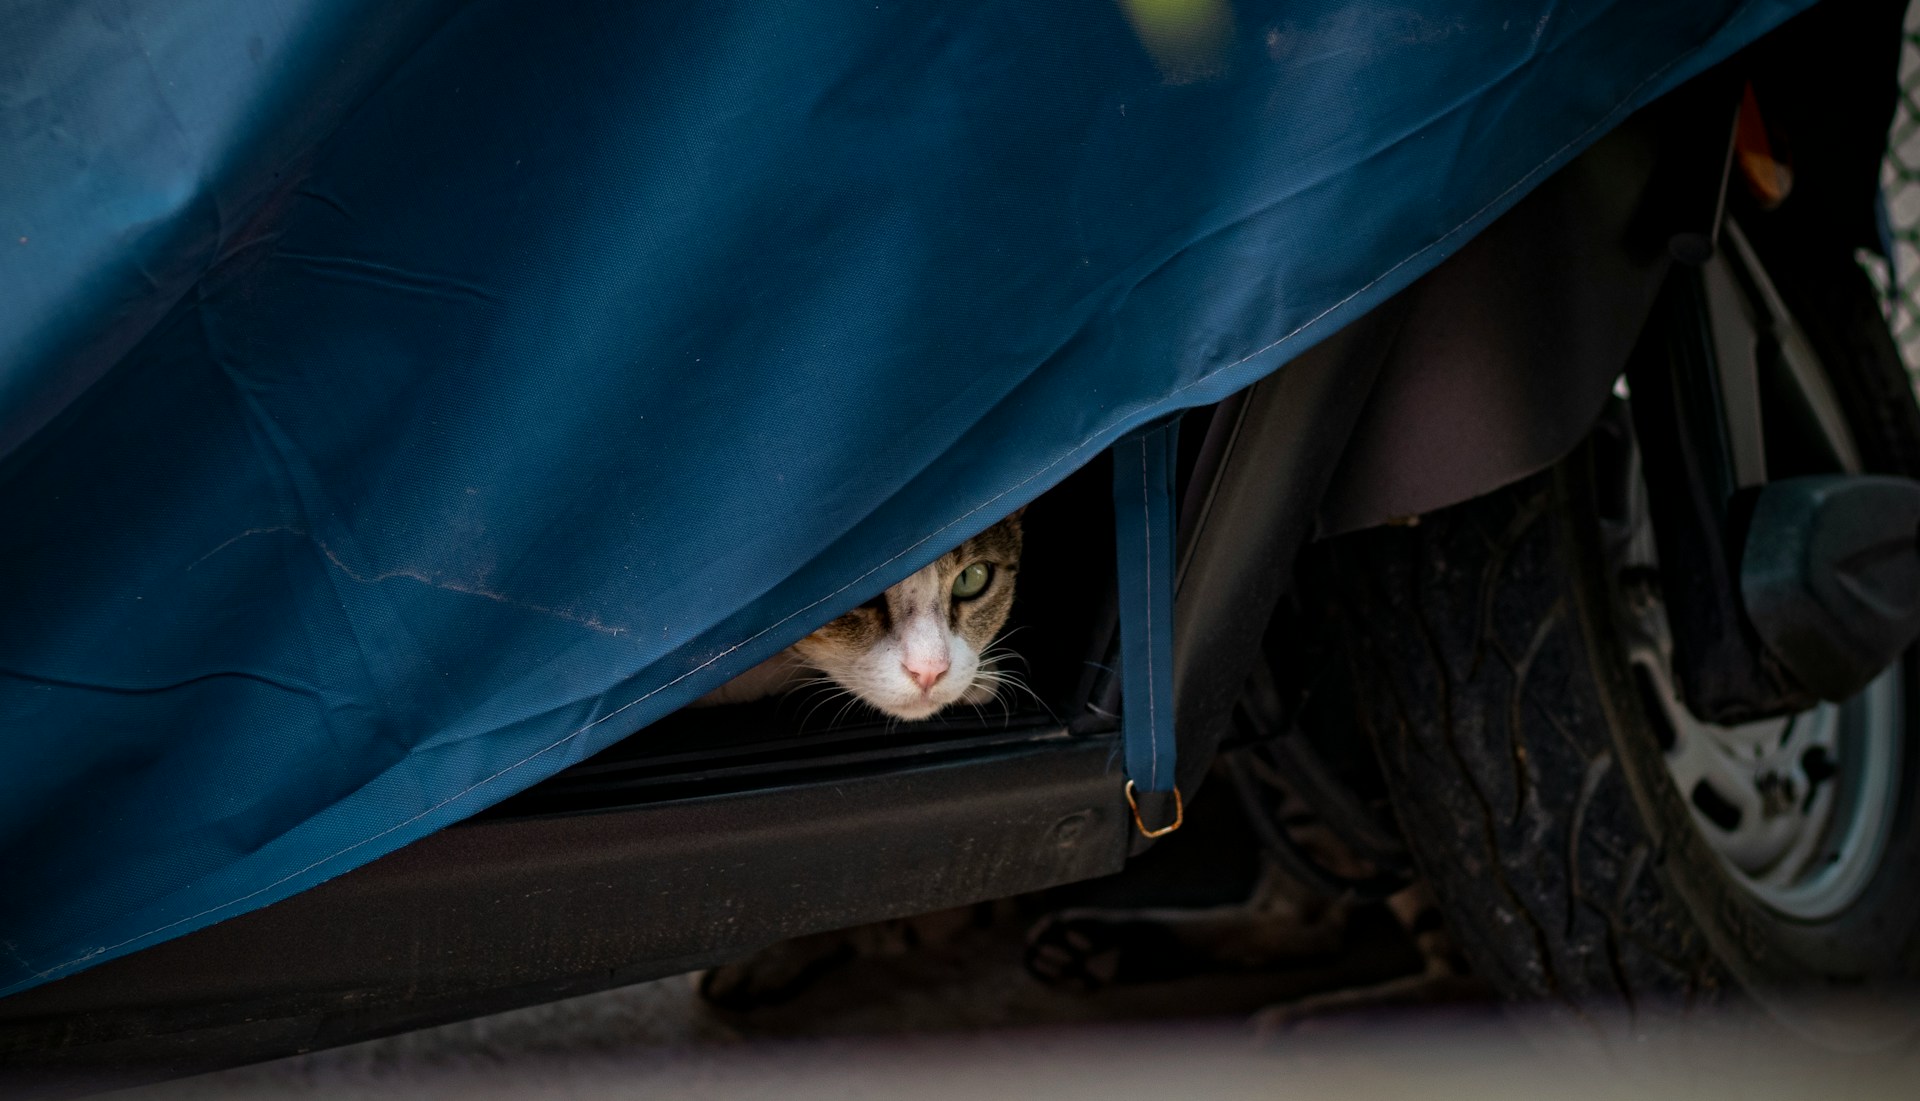 A cat hiding inside a car covered in a blue cloth